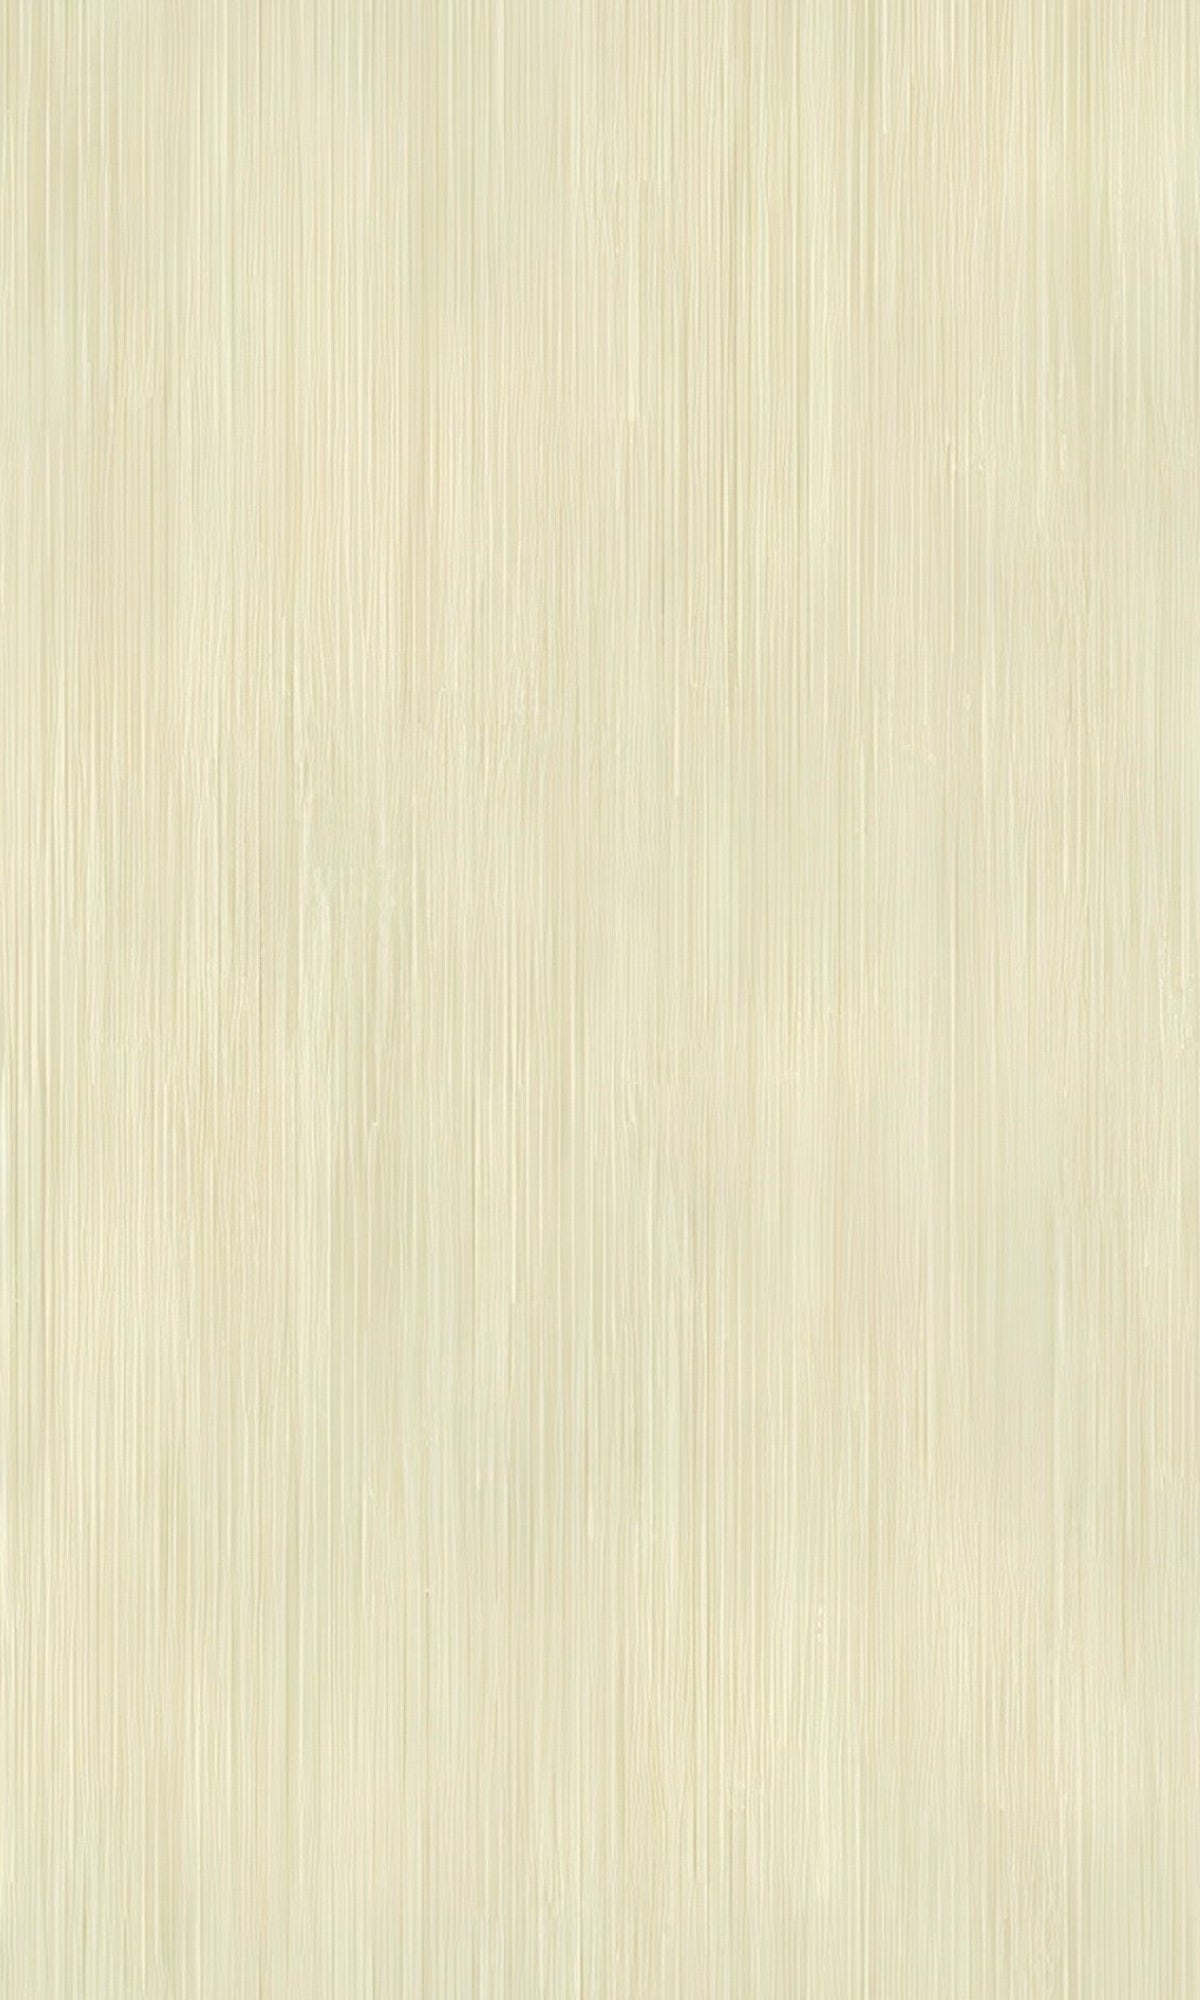 Hazelnut Basic Textured Vinyl Commercial Wallpaper C7568